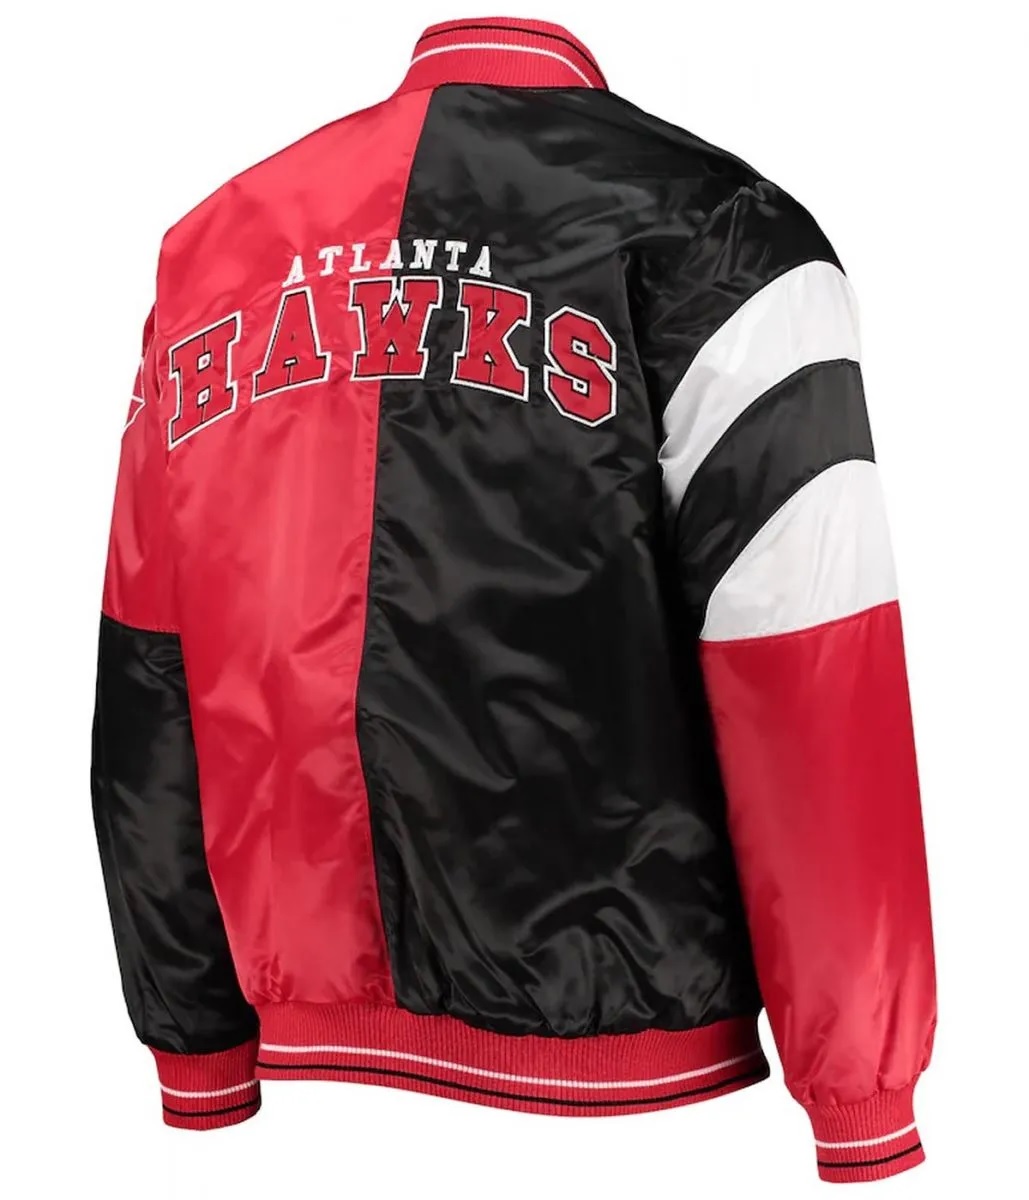 Atlanta Hawks 75th Anniversary Full-Snap Black and Red Satin Jacket